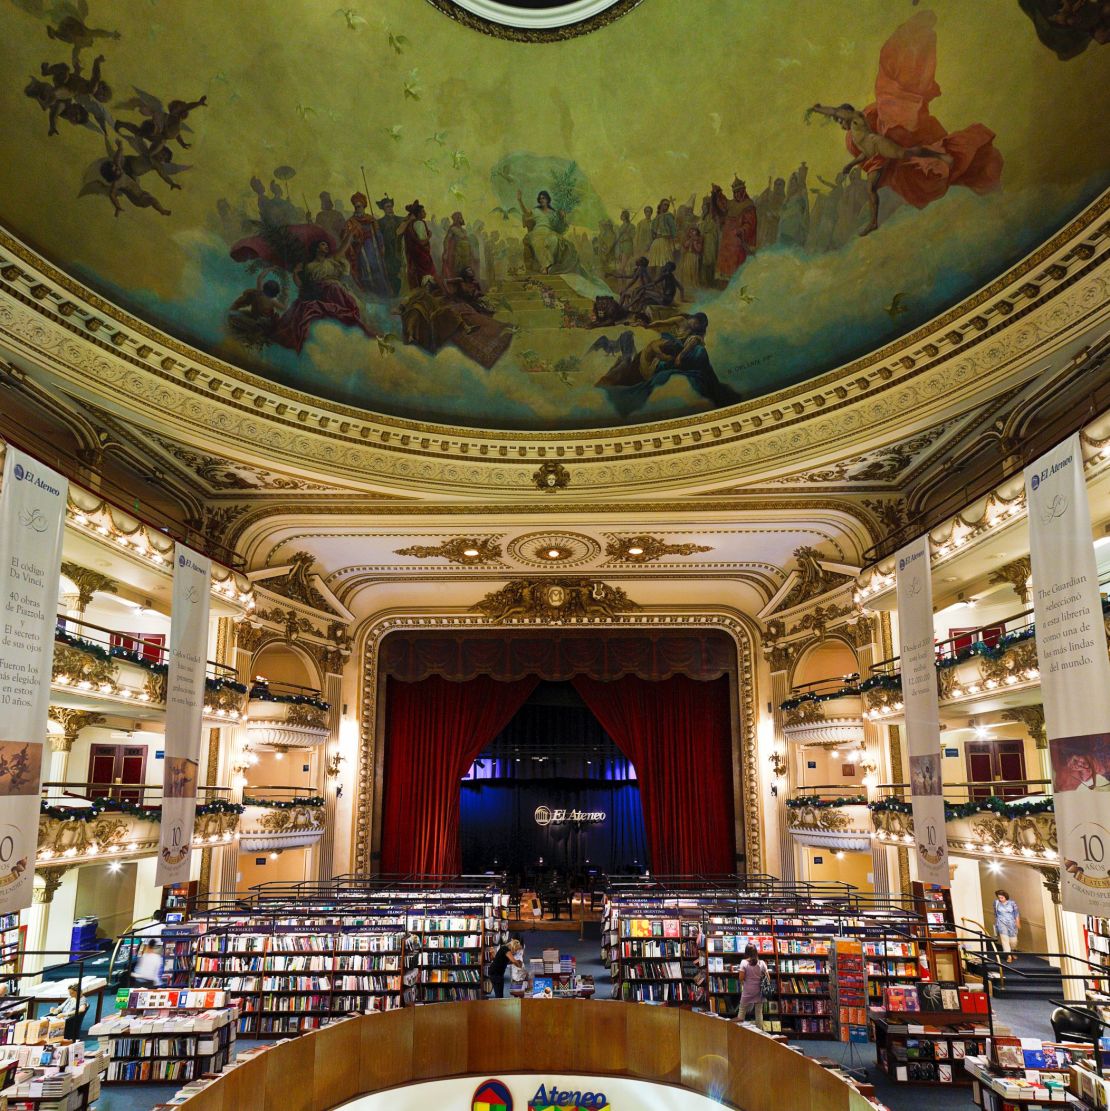 Originally a theater, El Ateneo was converted into a cinema and then a bookstore. 